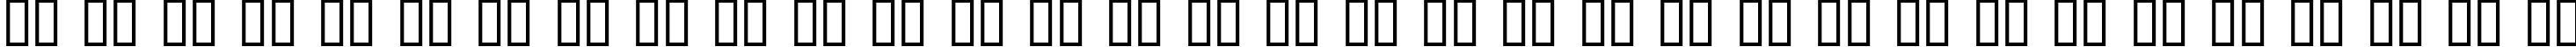 Пример написания русского алфавита шрифтом Wildstyle